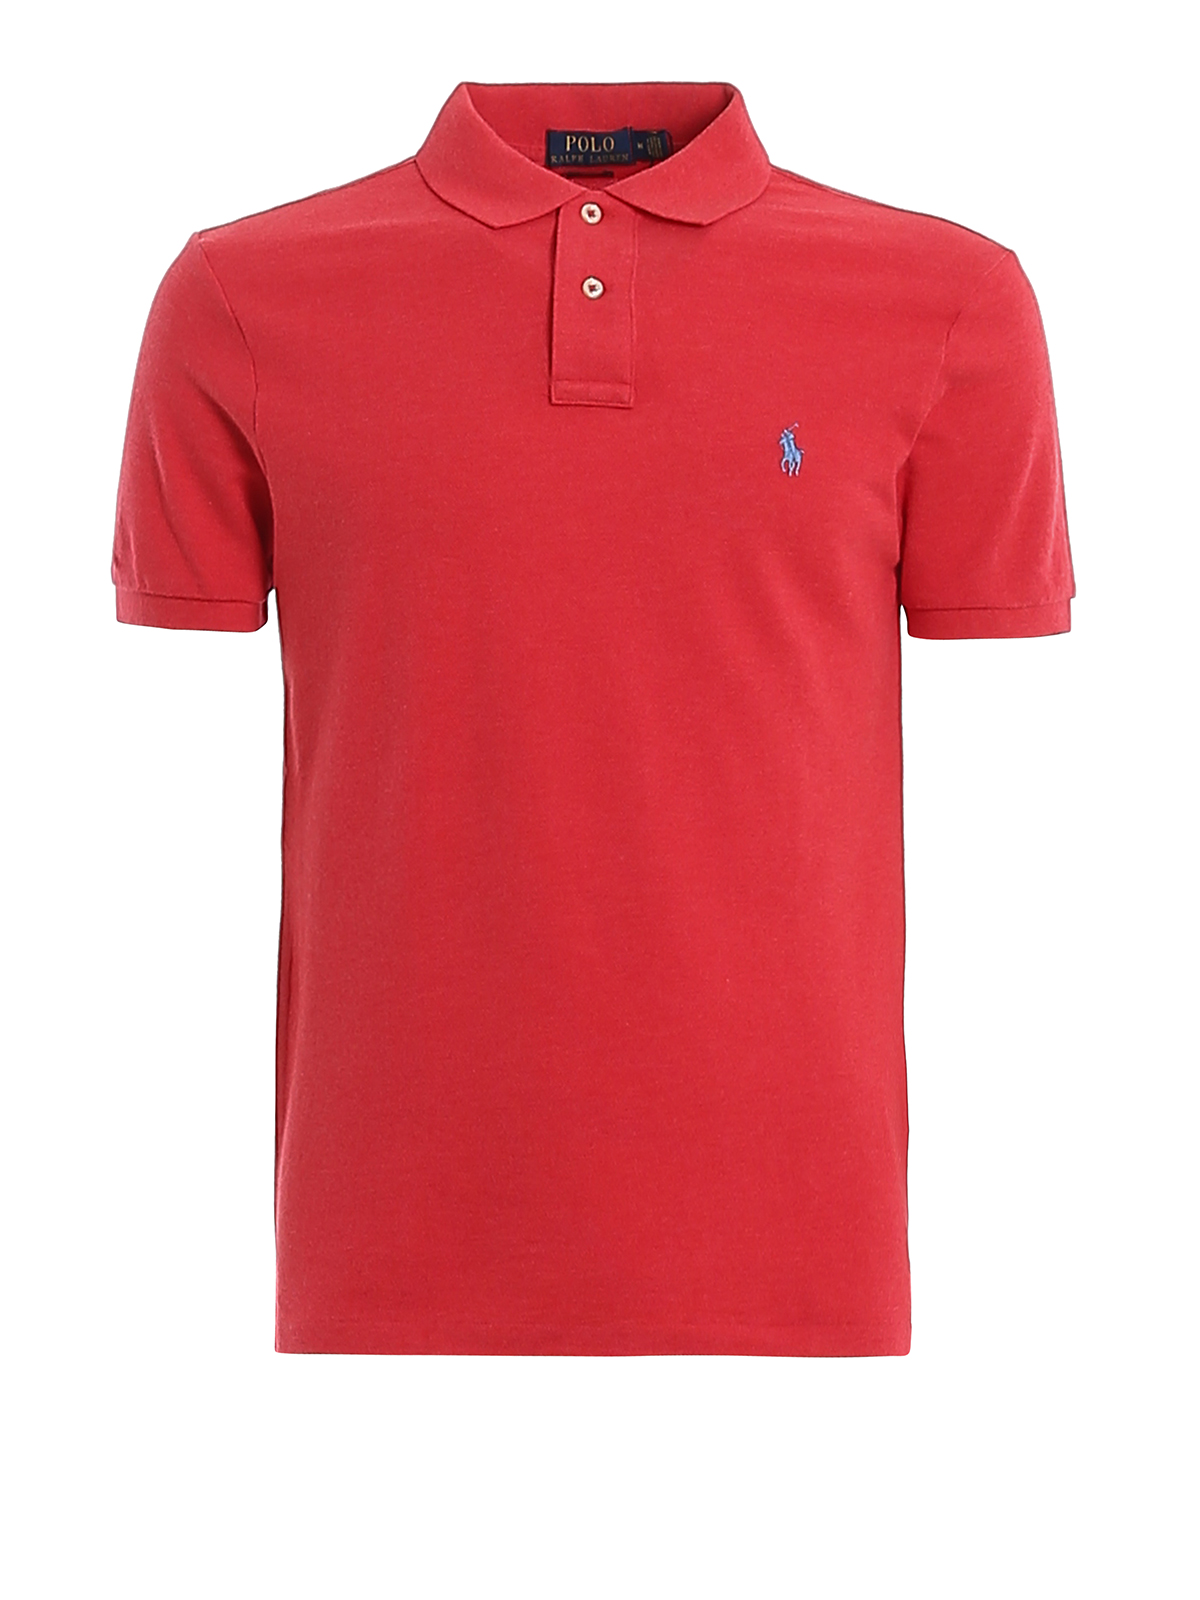 binnenkort breuk Observeer Polo shirts Polo Ralph Lauren - Red slim fit cotton pique polo -  710536856209